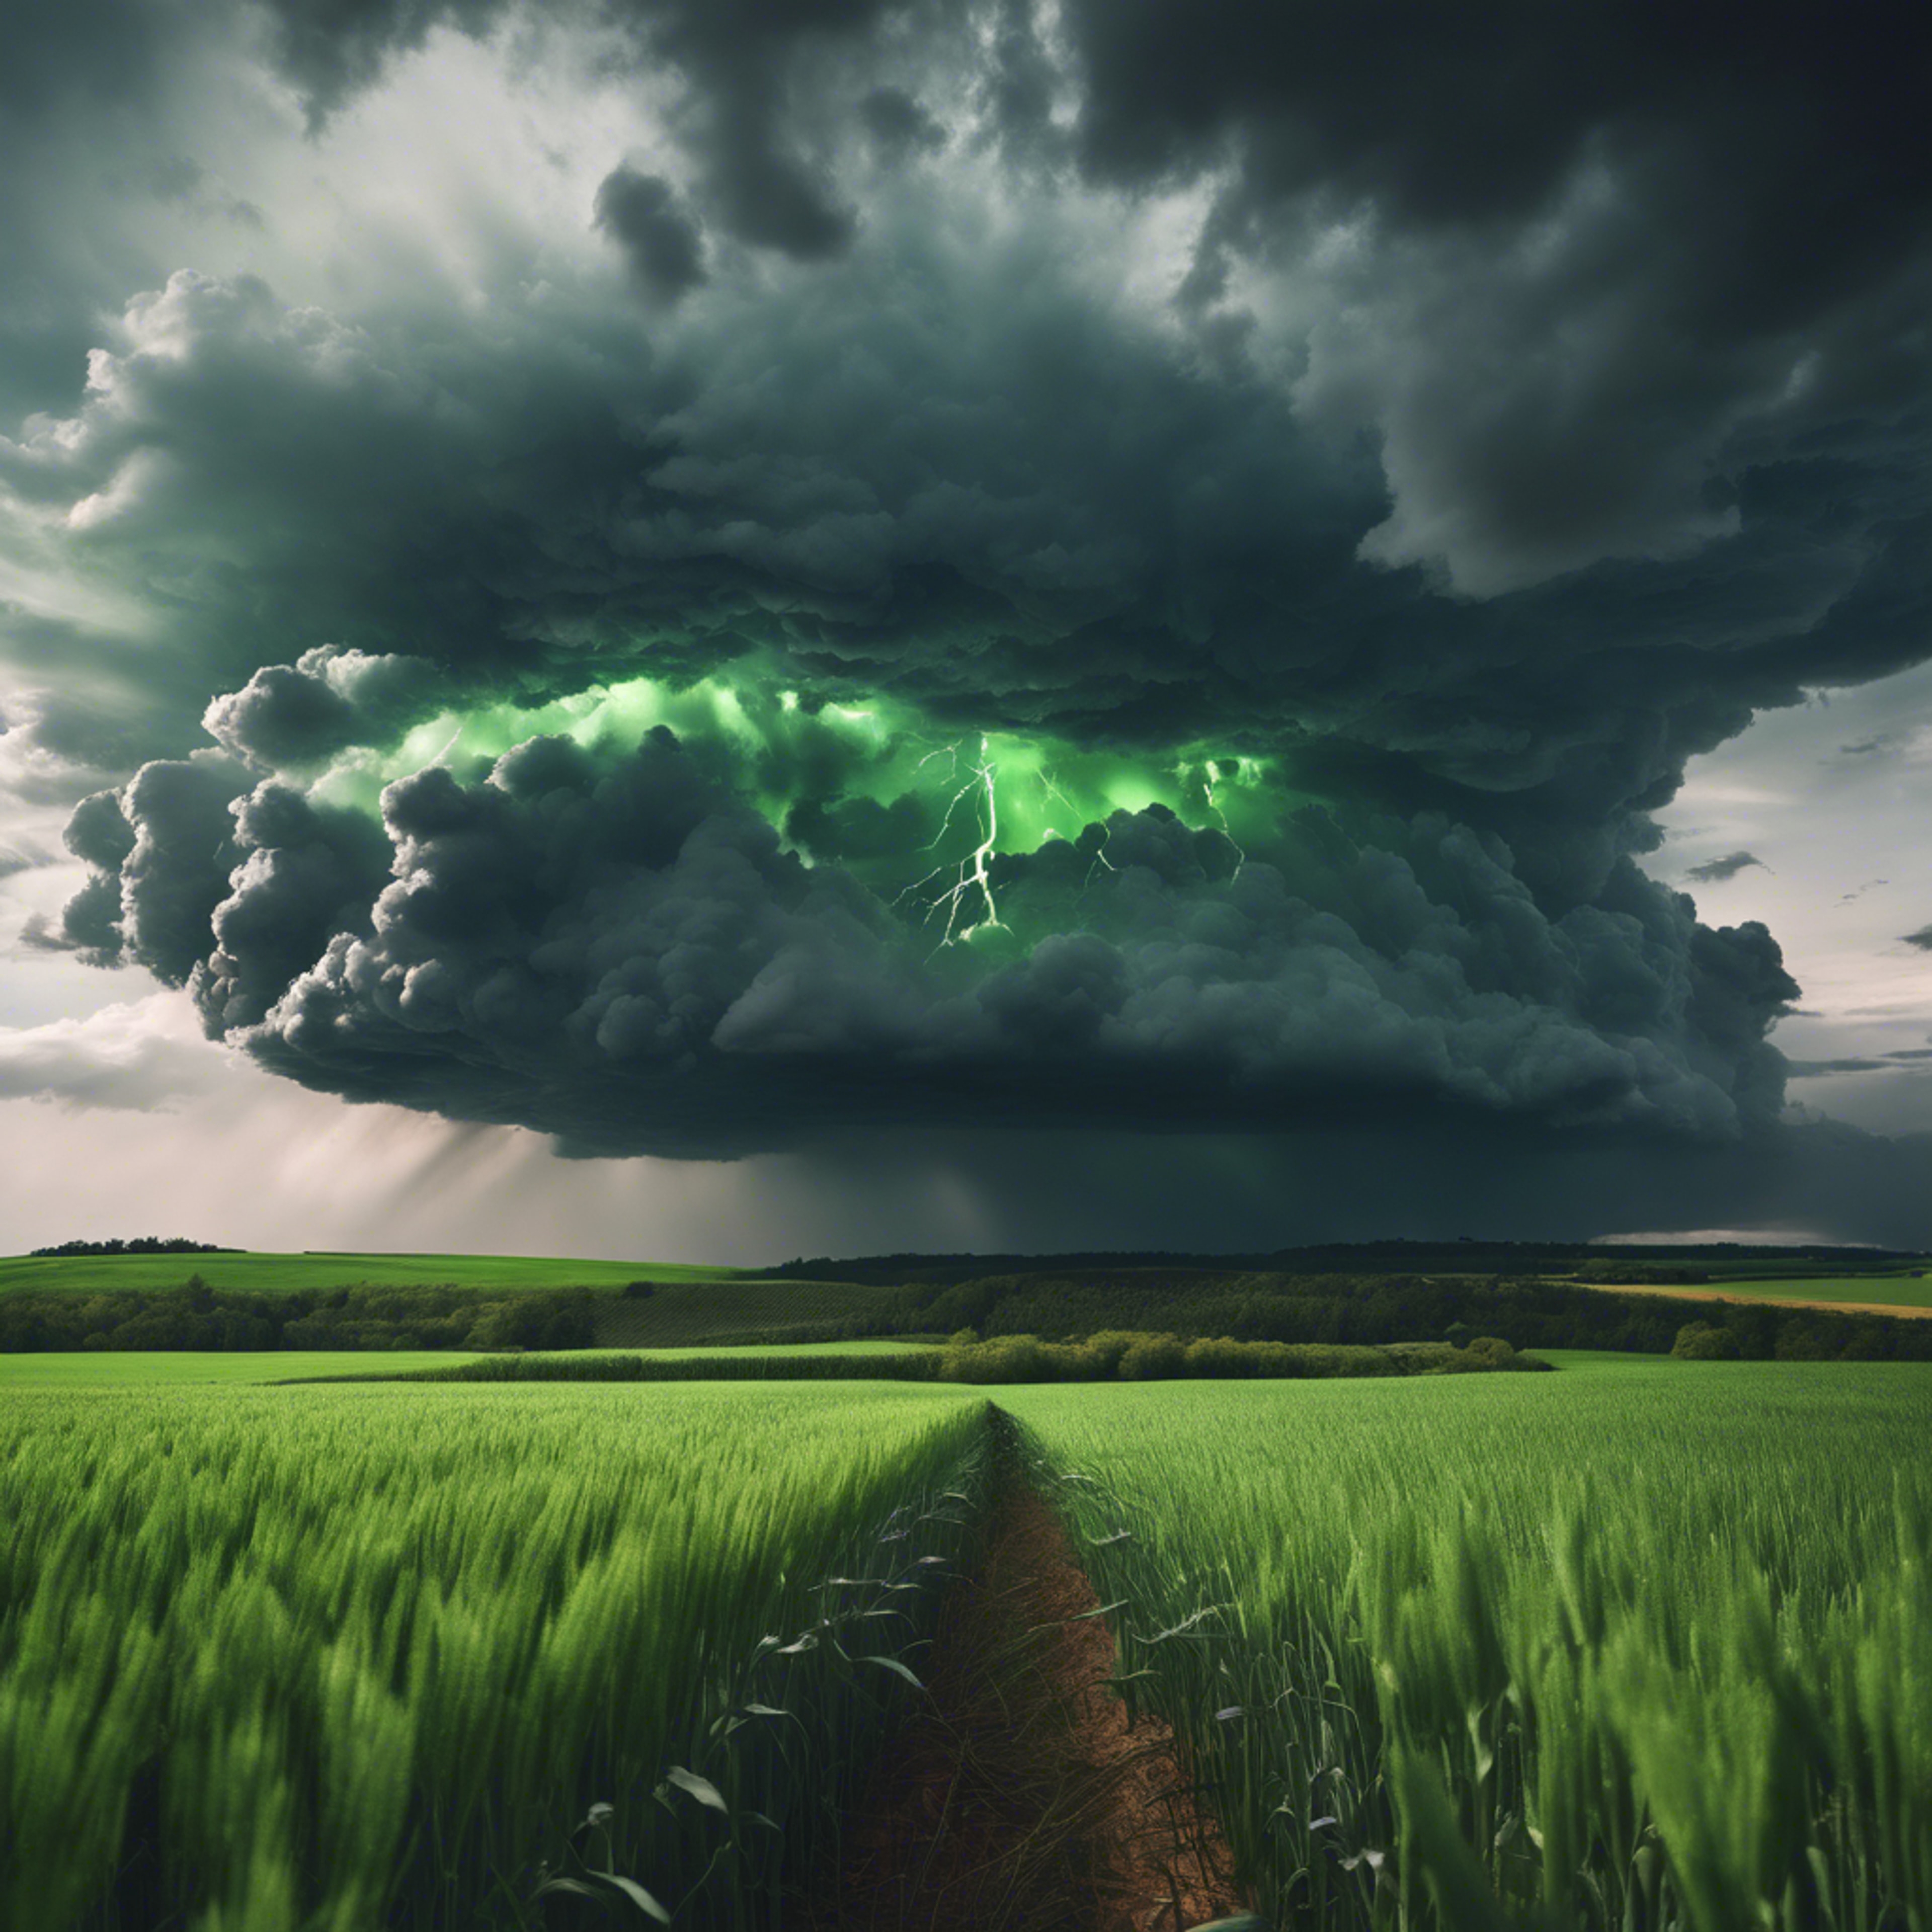 A dramatic black storm cloud over a vibrant green wheat field. Hintergrund[2ef08a34070042519f8d]